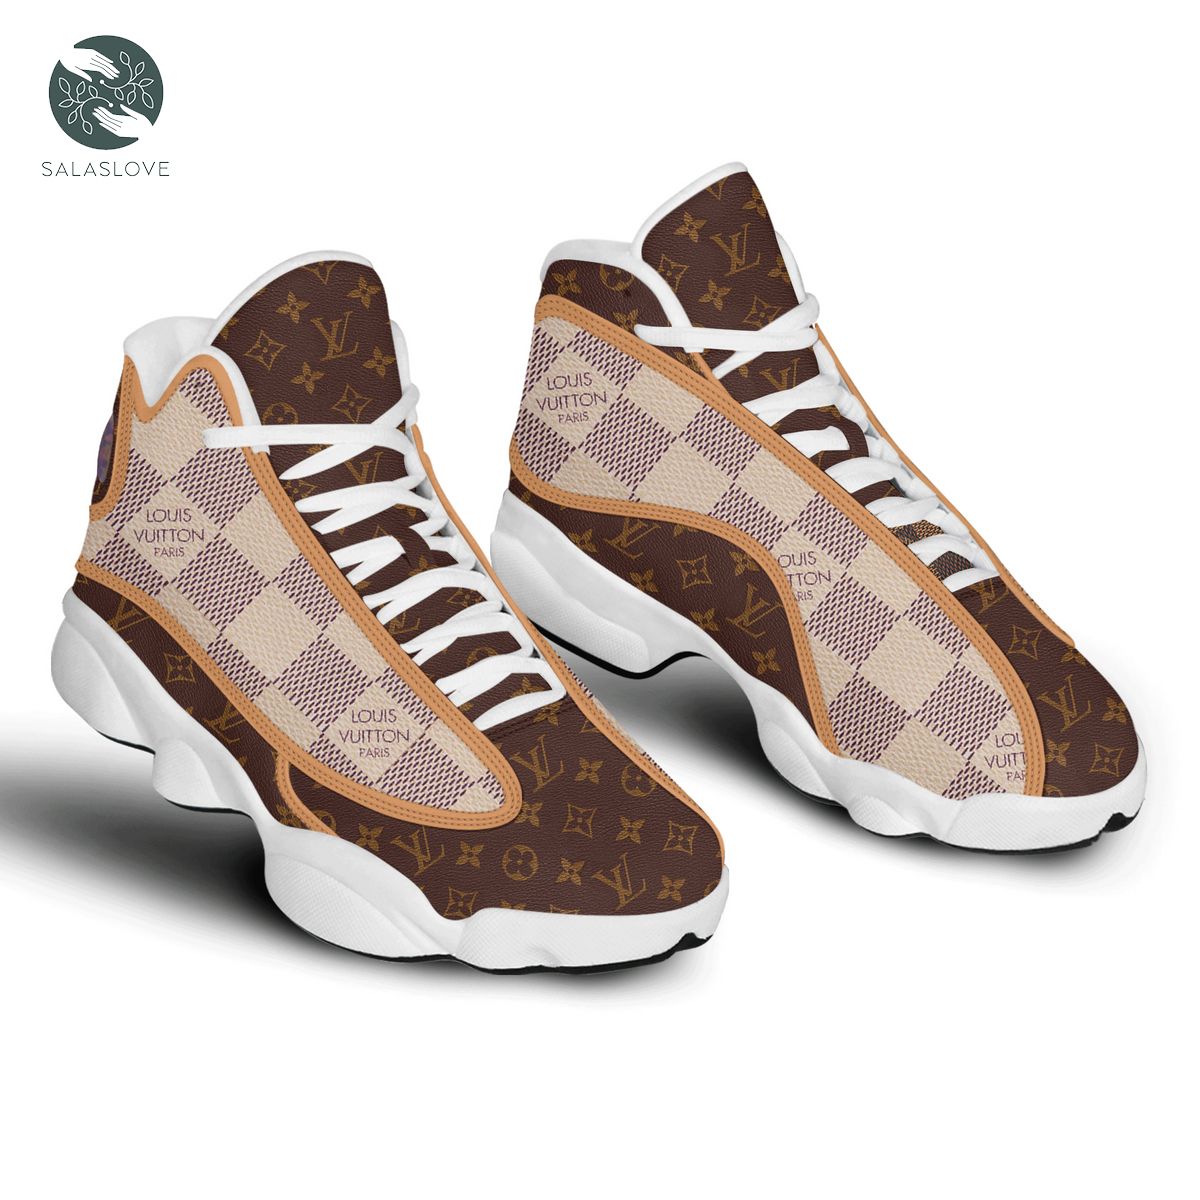 Louis Vuitton Air Jordan 13 Sneakers Shoes For Men Women